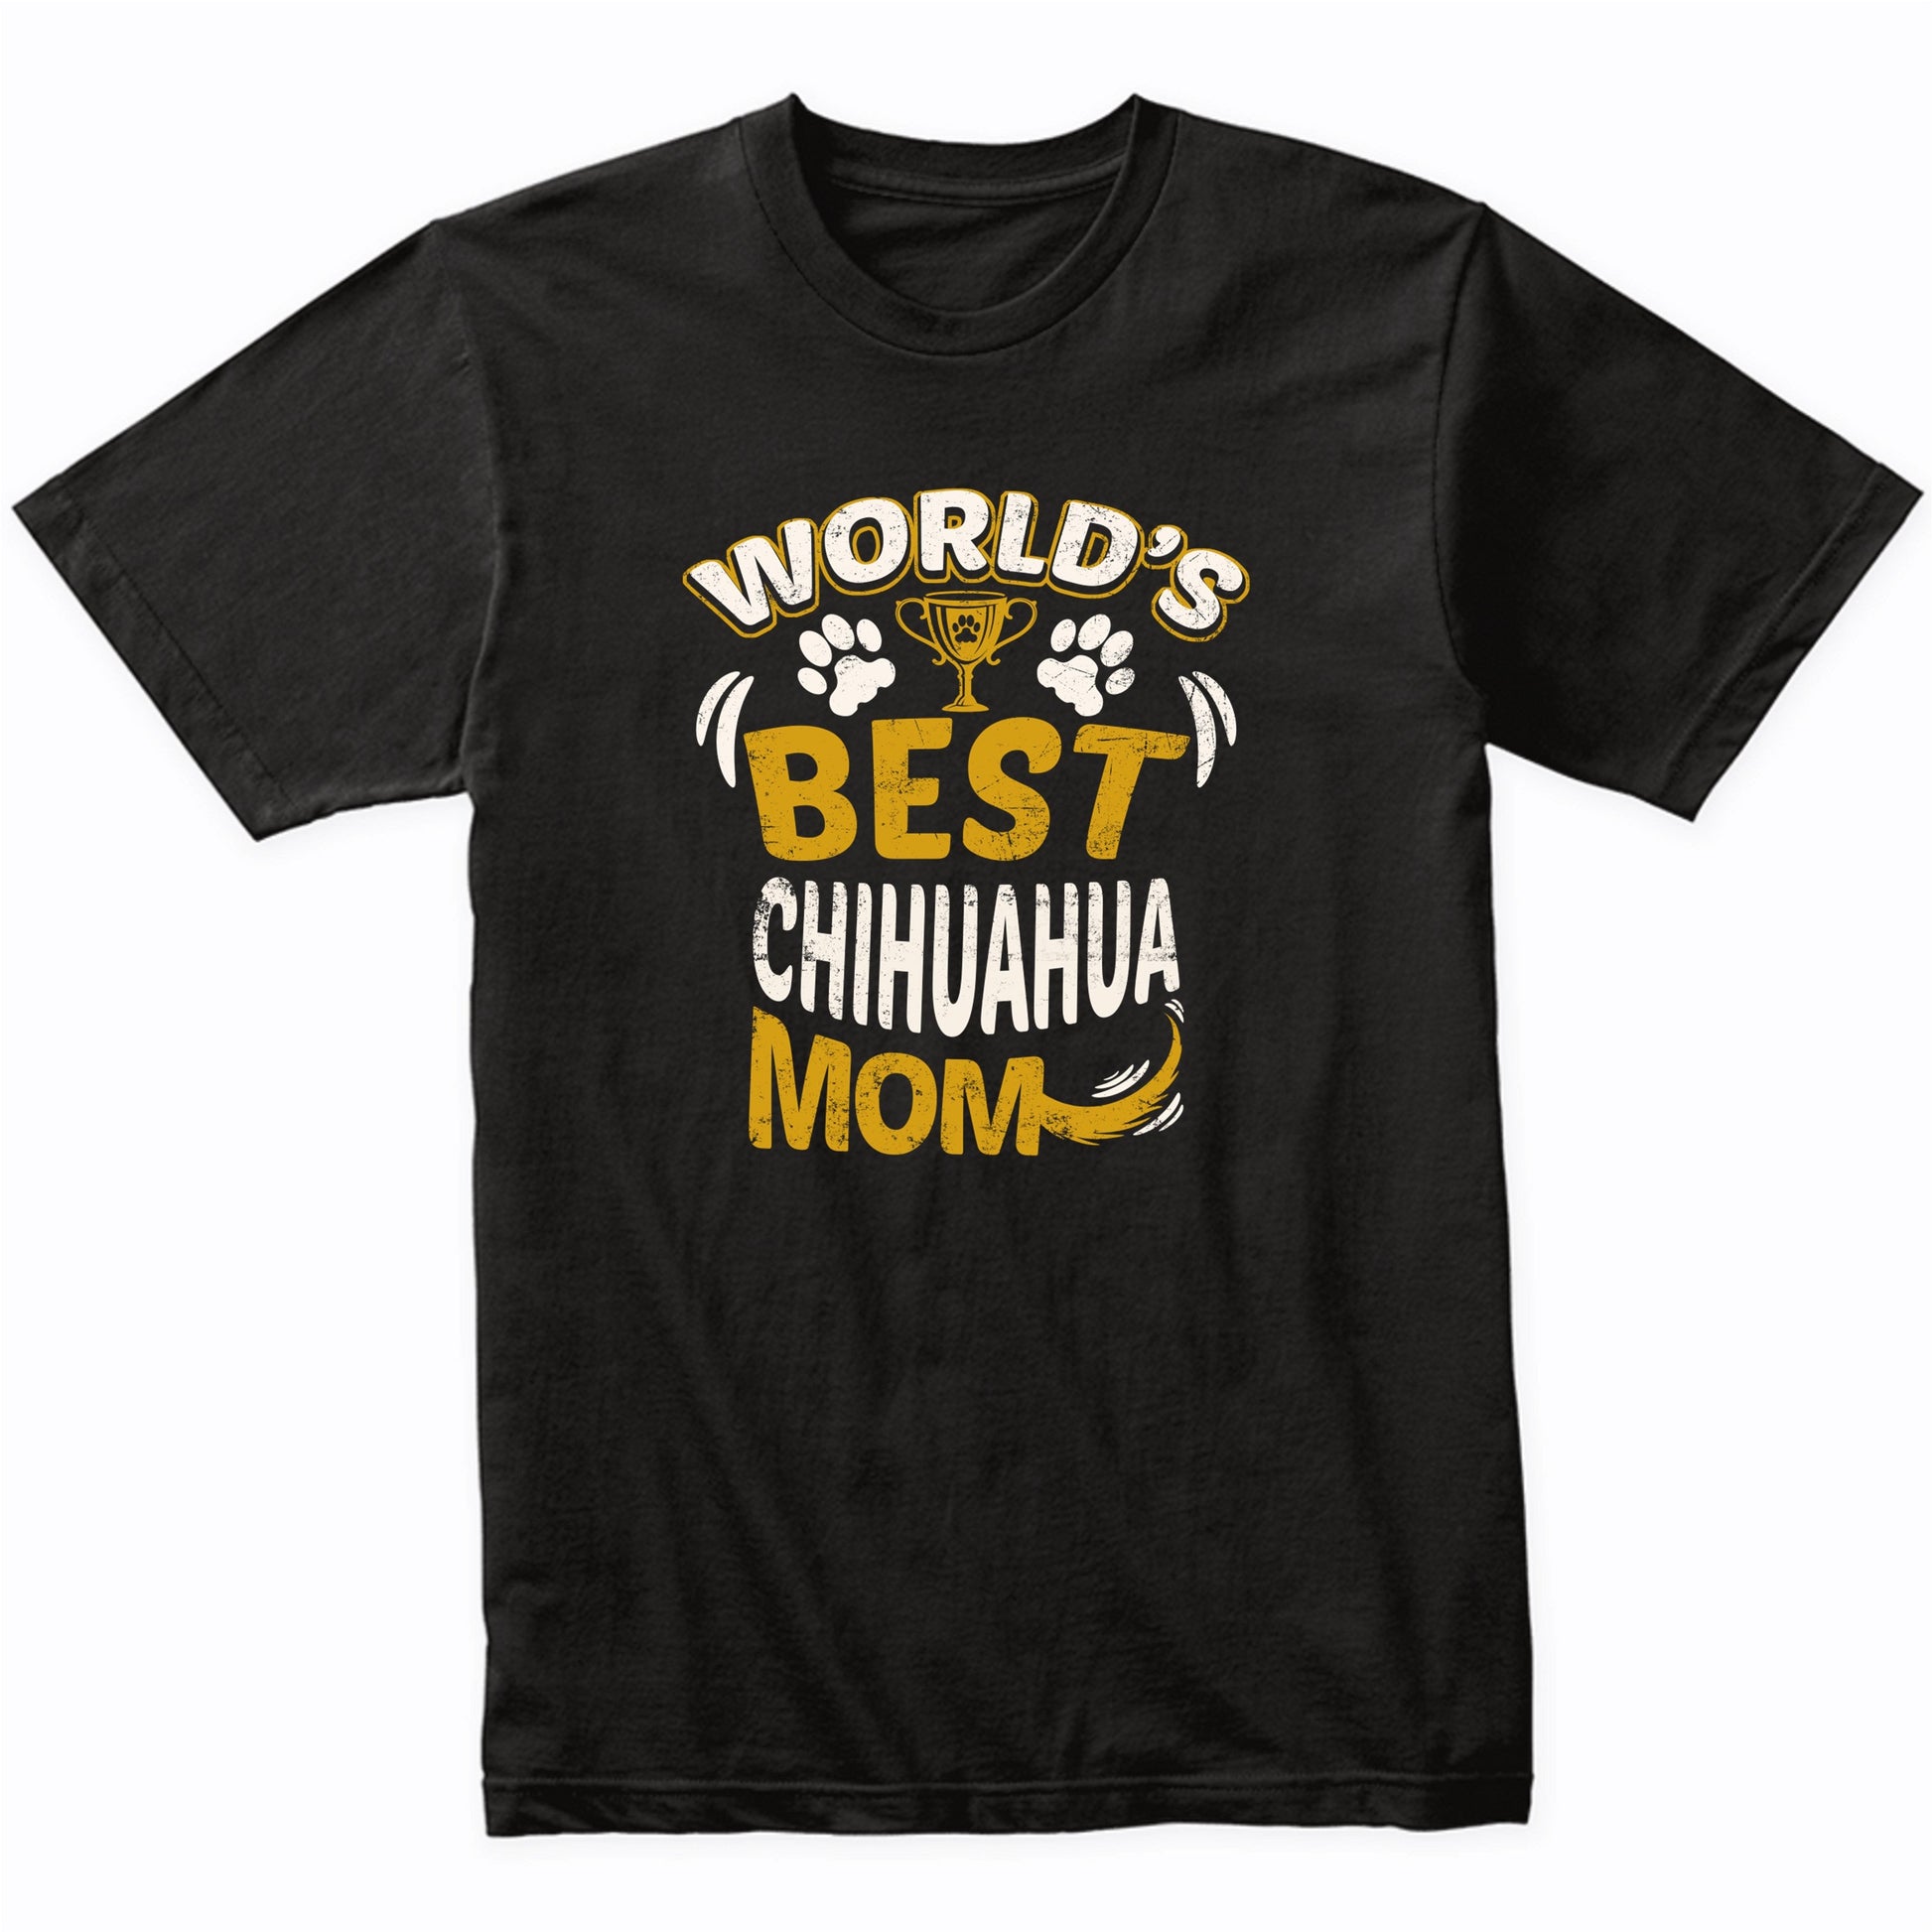 World's Best Chihuahua Mom Graphic T-Shirt